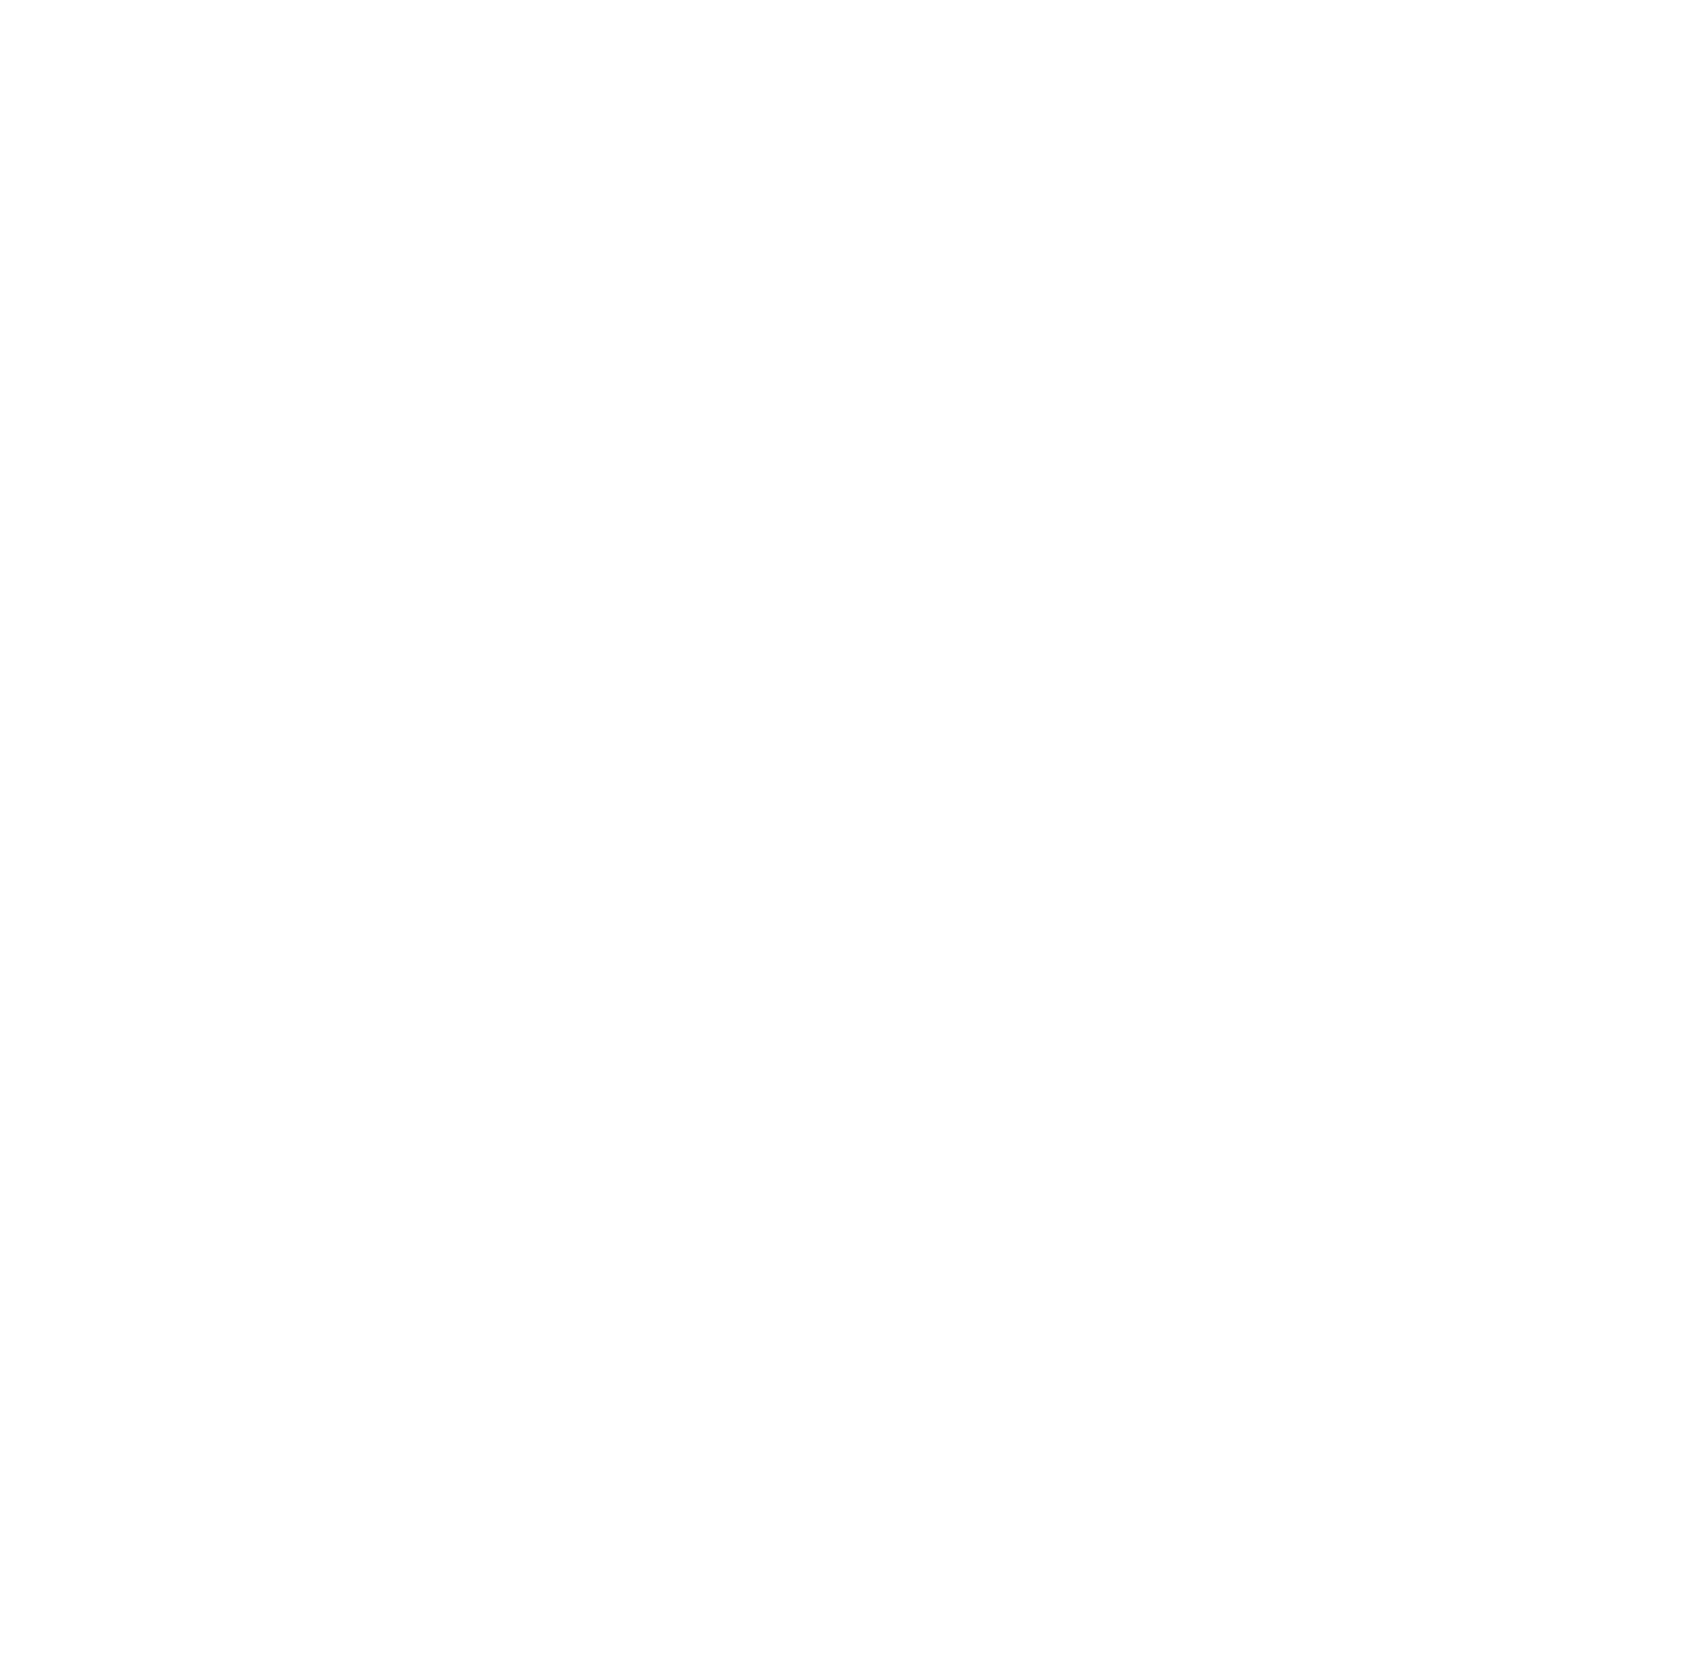 Motor City Corals